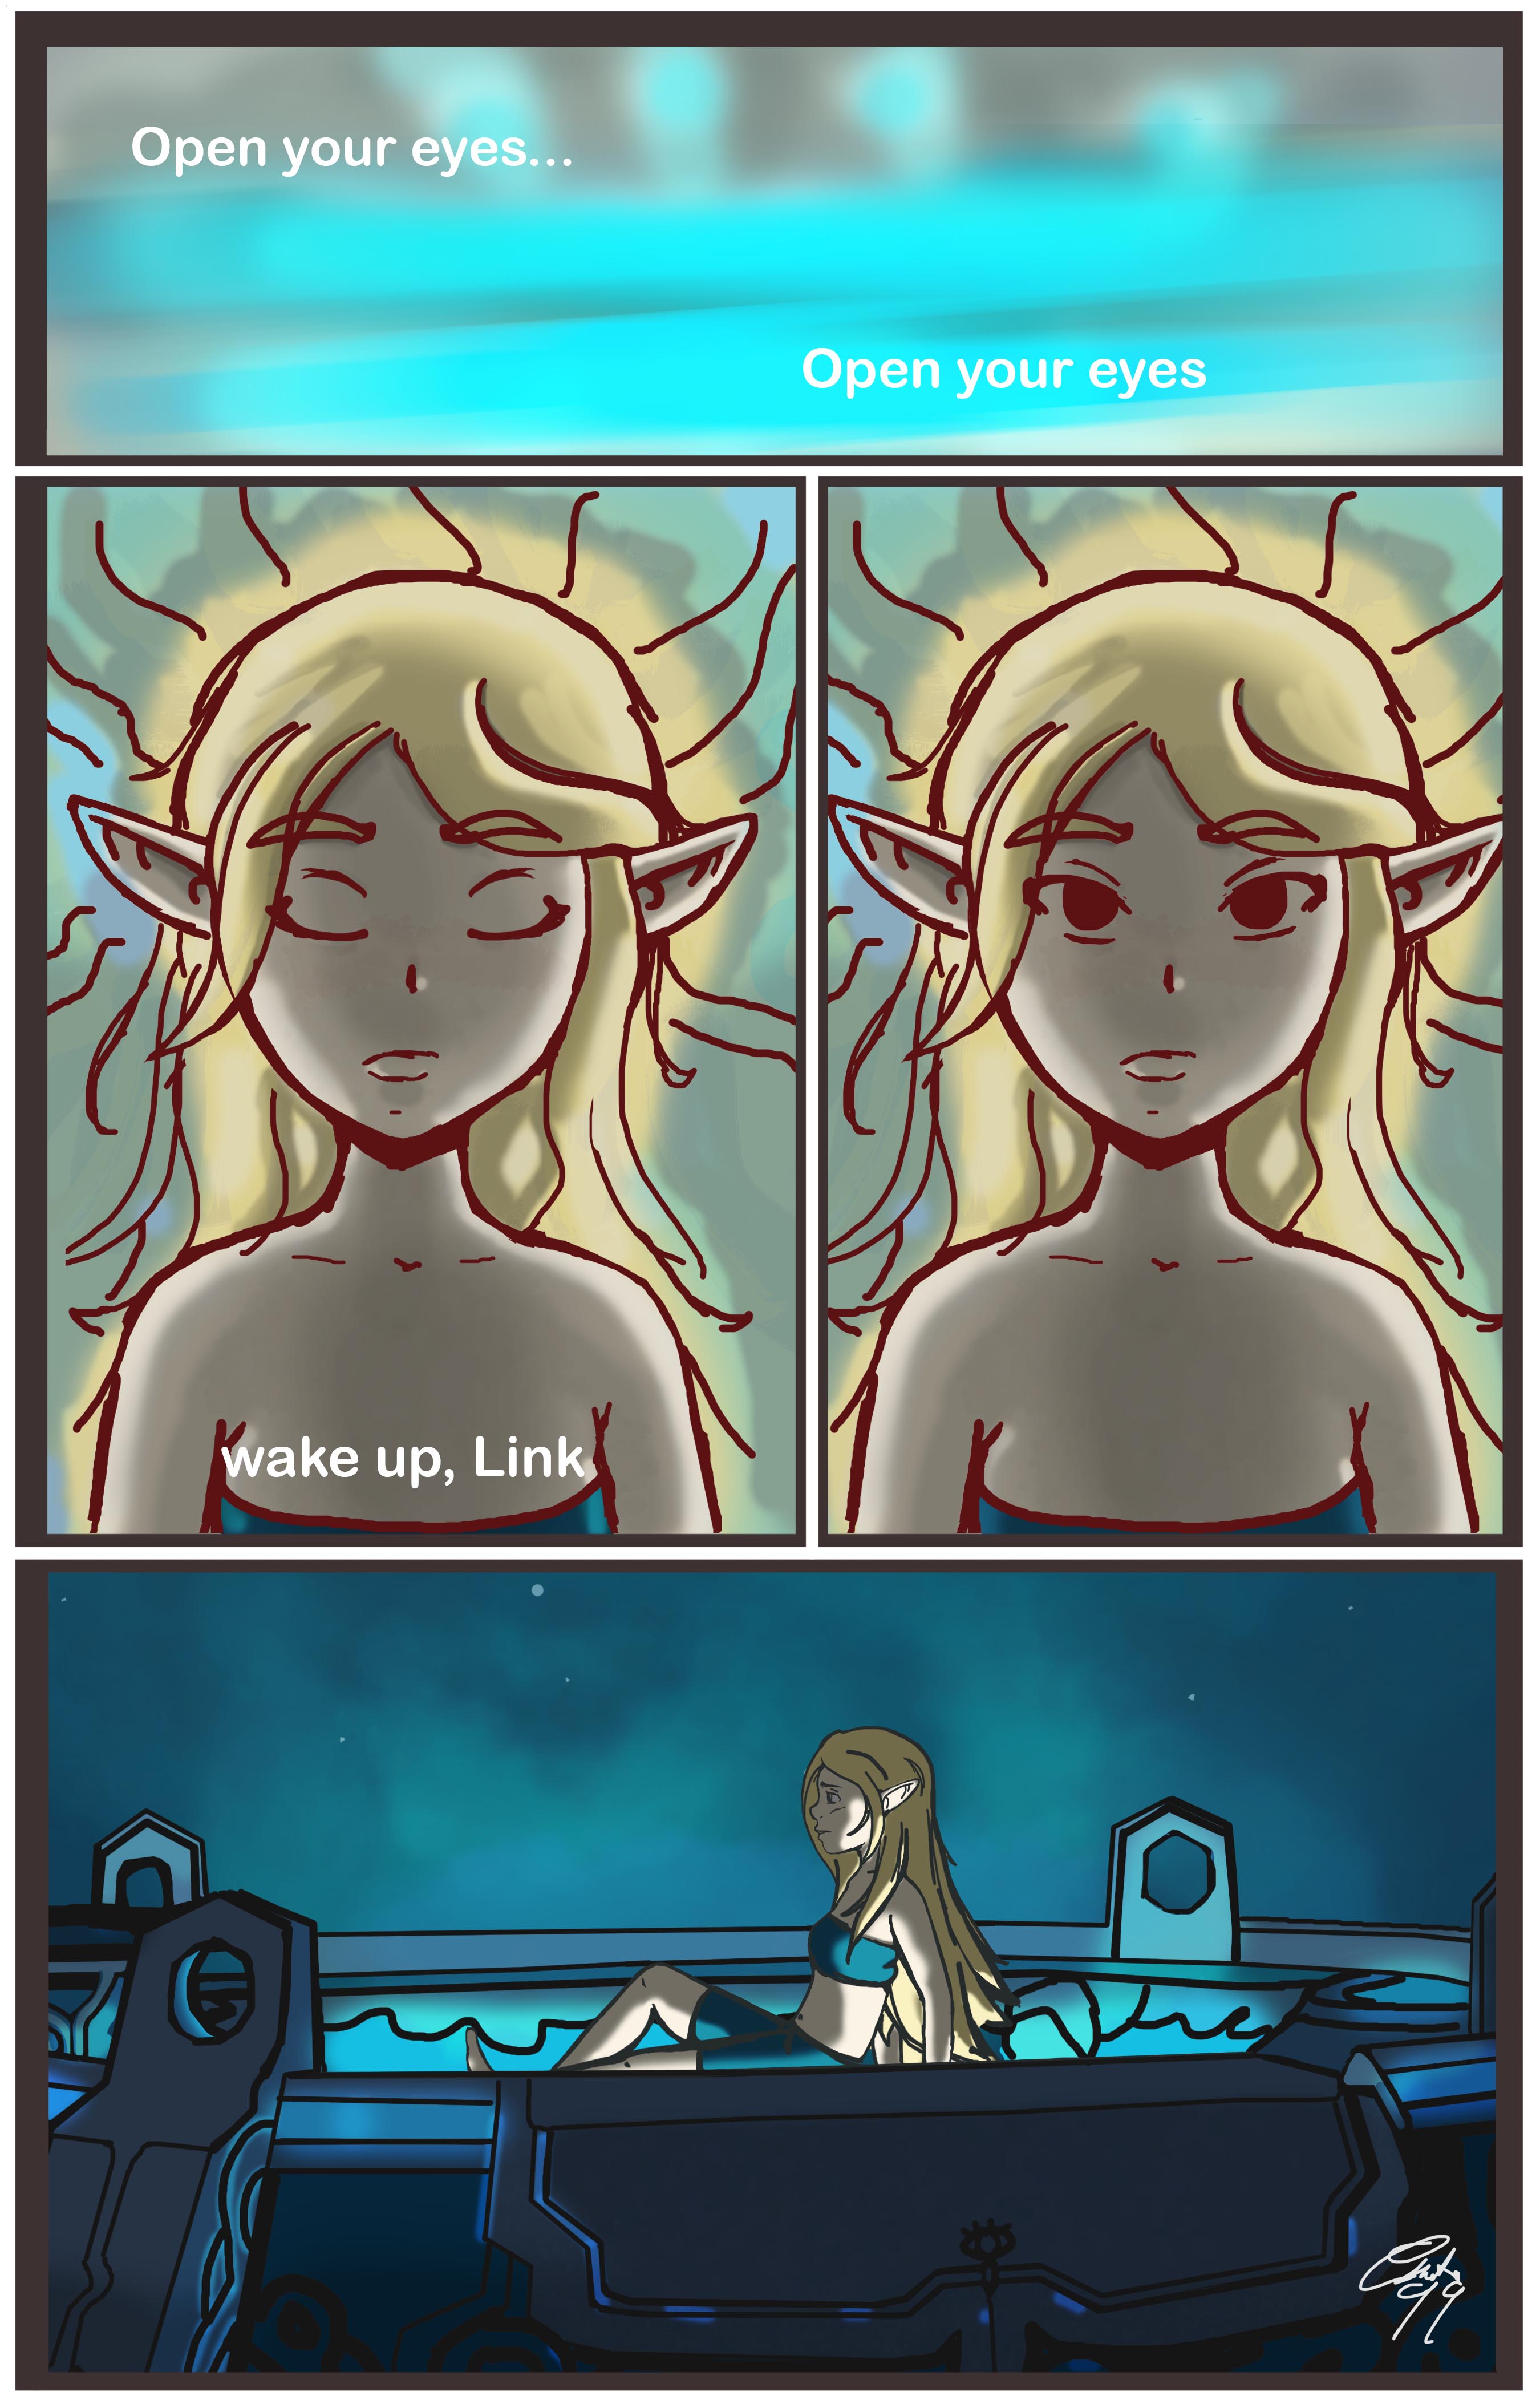 Legend of Zelda Alttp - Link by Leonio on DeviantArt